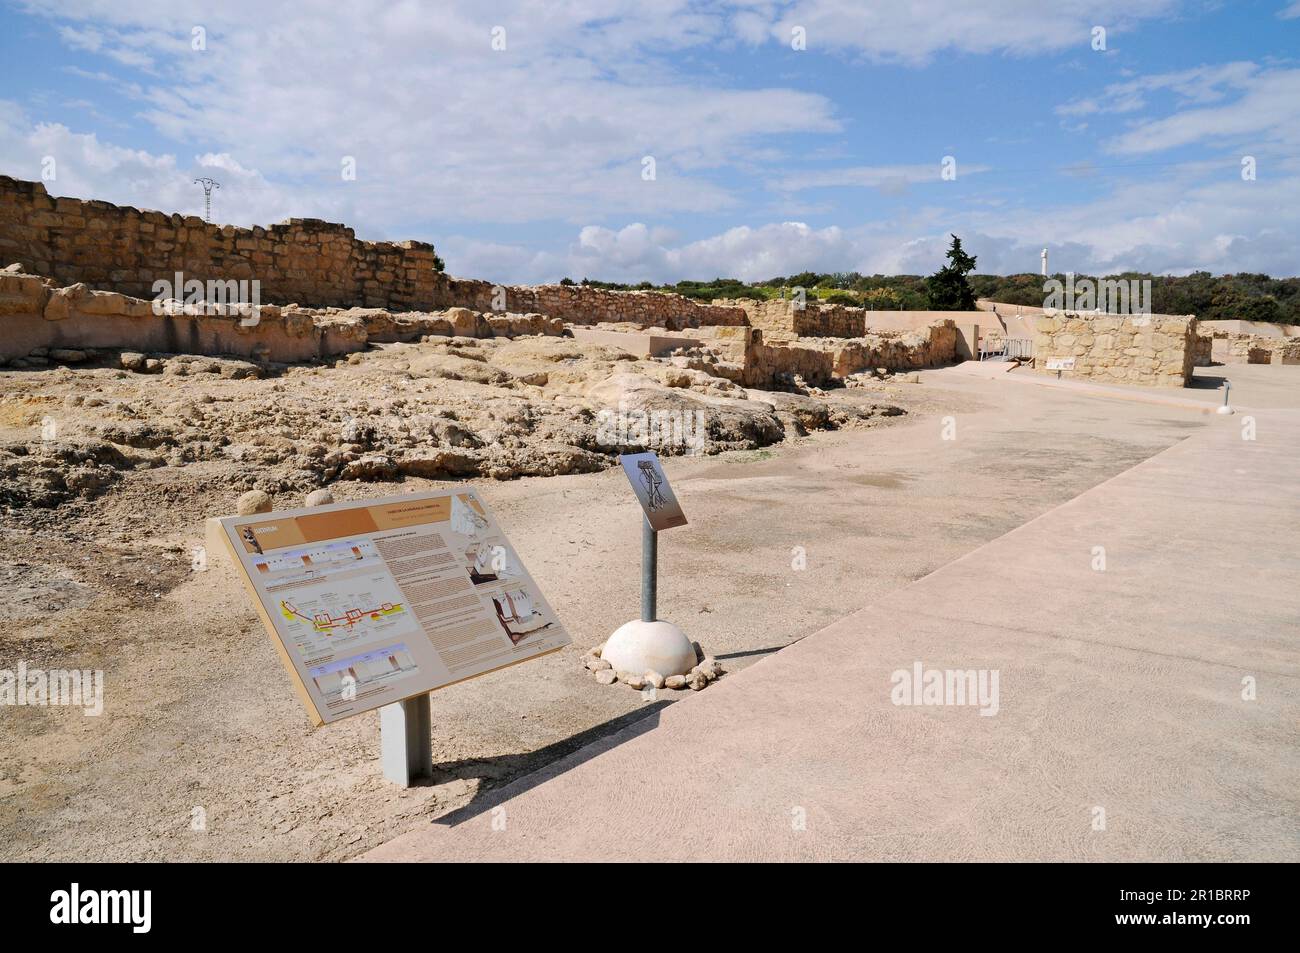 Yacimiento Arqueologico Lucentum, archaeological Roman site Lucentum, Alicante, Costa Blanca, Spain Stock Photo